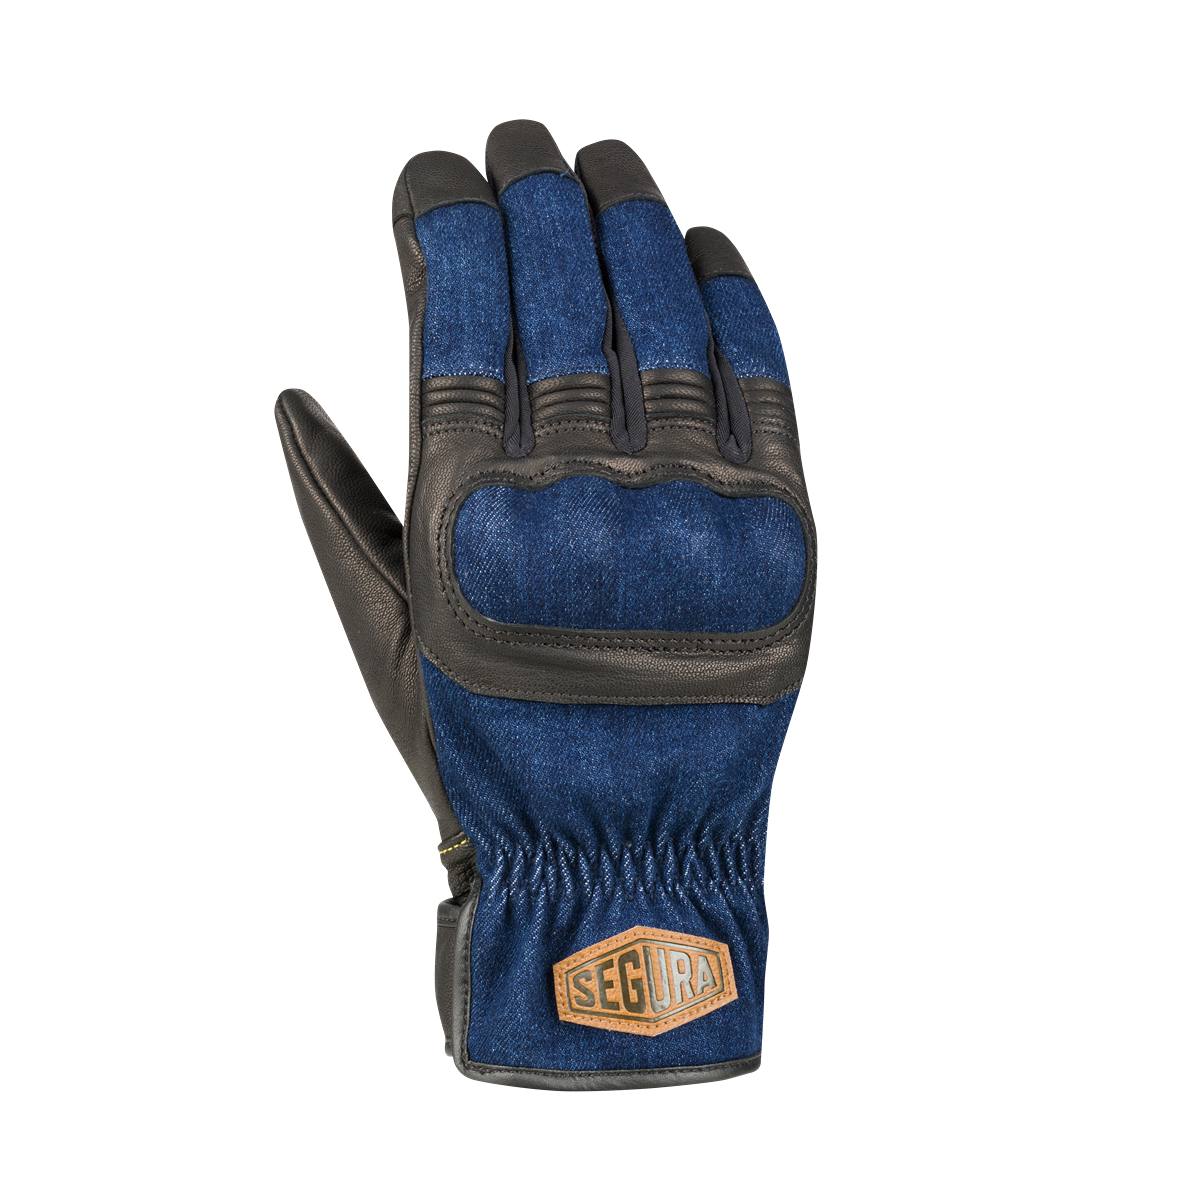 Image of Segura Hunky Gloves Black Blue Size T9 ID 3660815190555